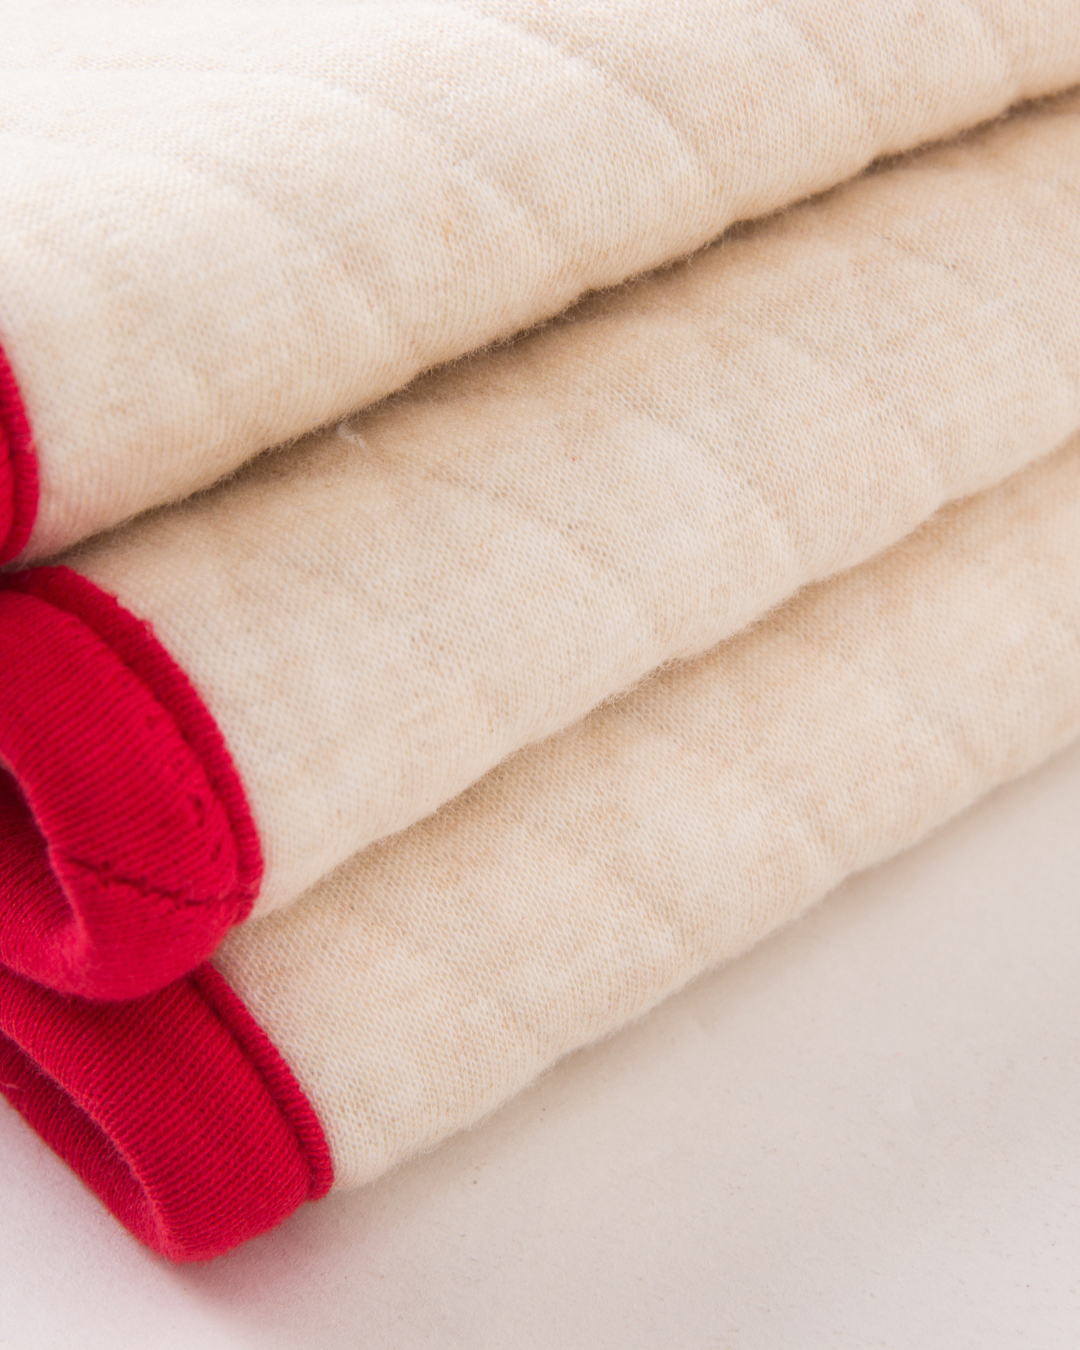 Radia Smart EMF Protection Blanket, 5G Anti-radiation, Joy Red, Organic  Cotton